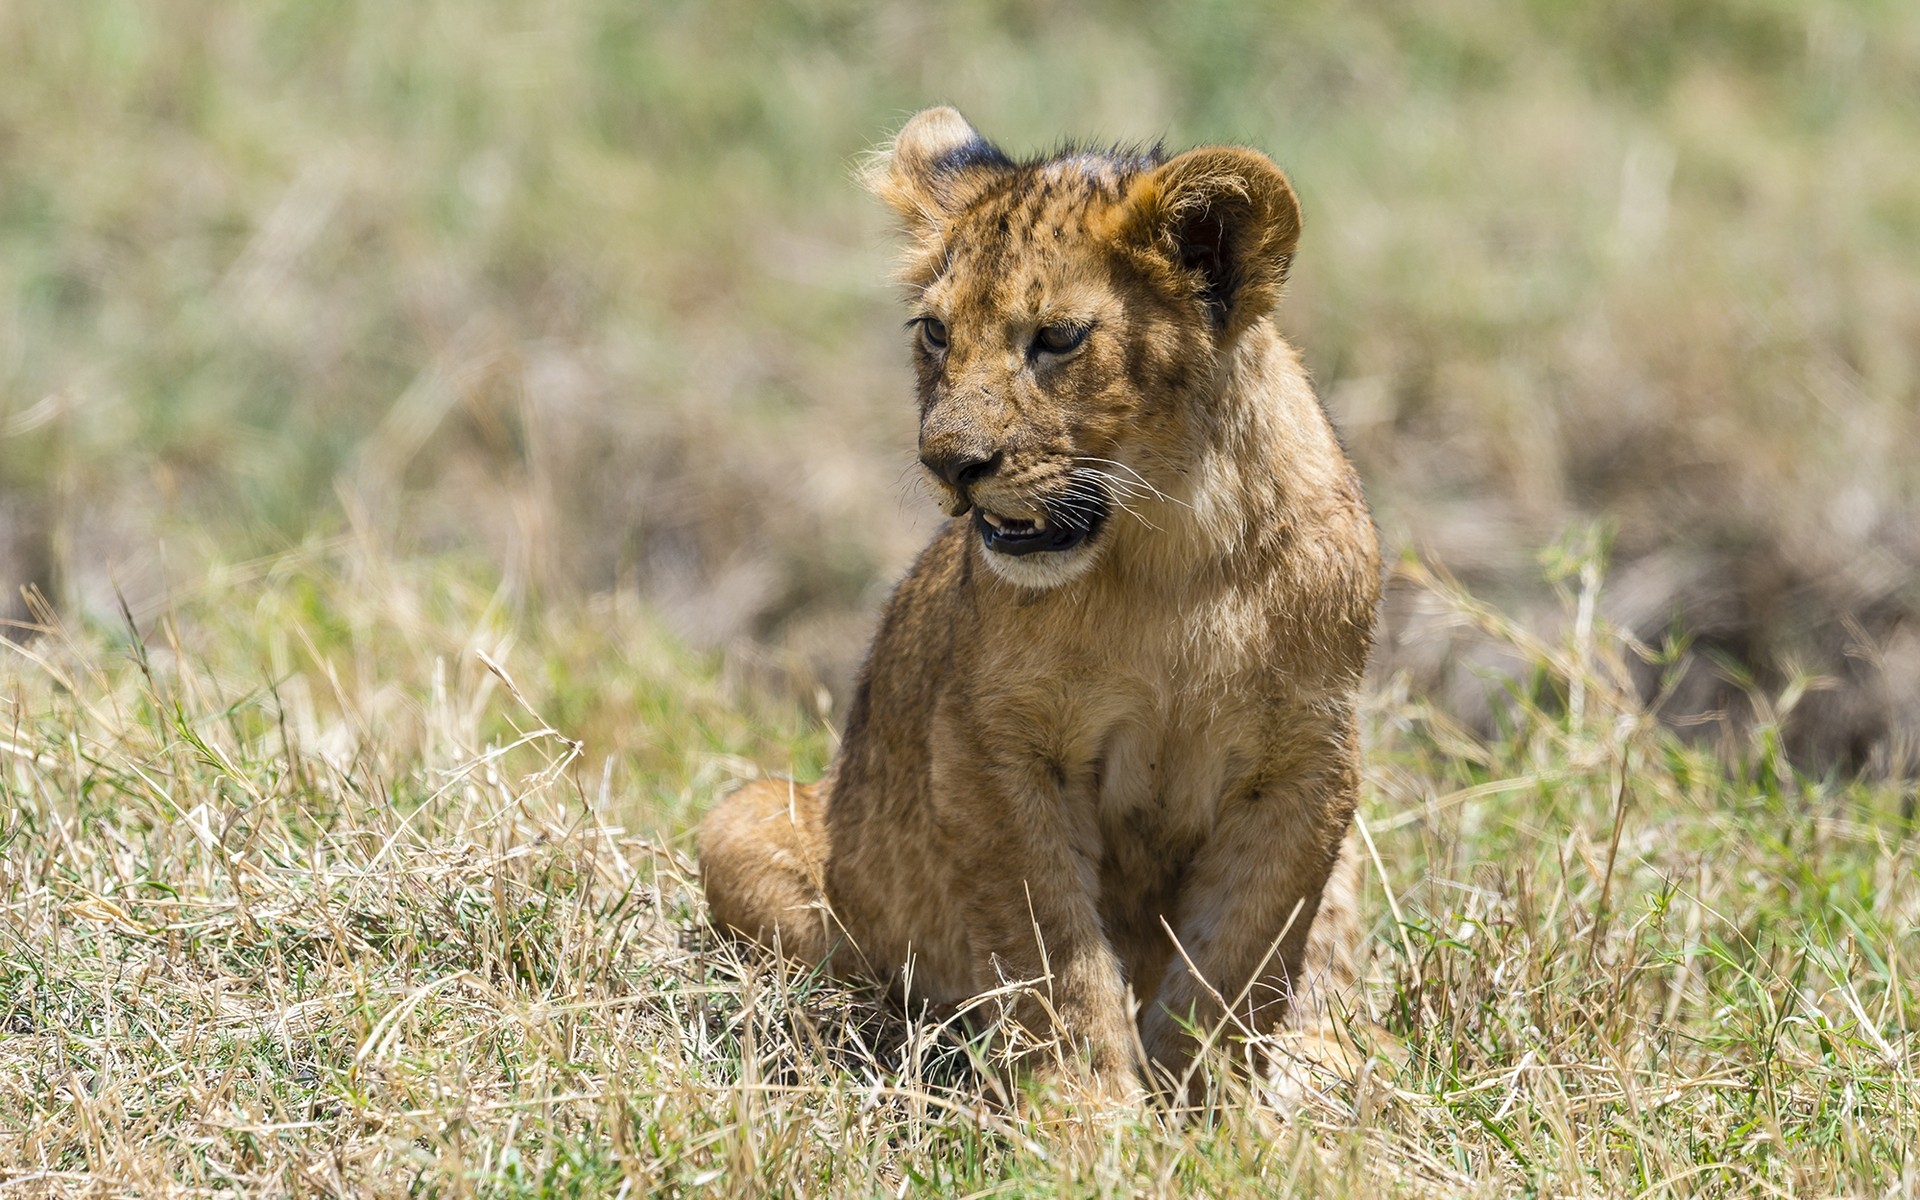 animals wildlife mammal cat animal grass wild lion nature predator safari carnivore cute cub